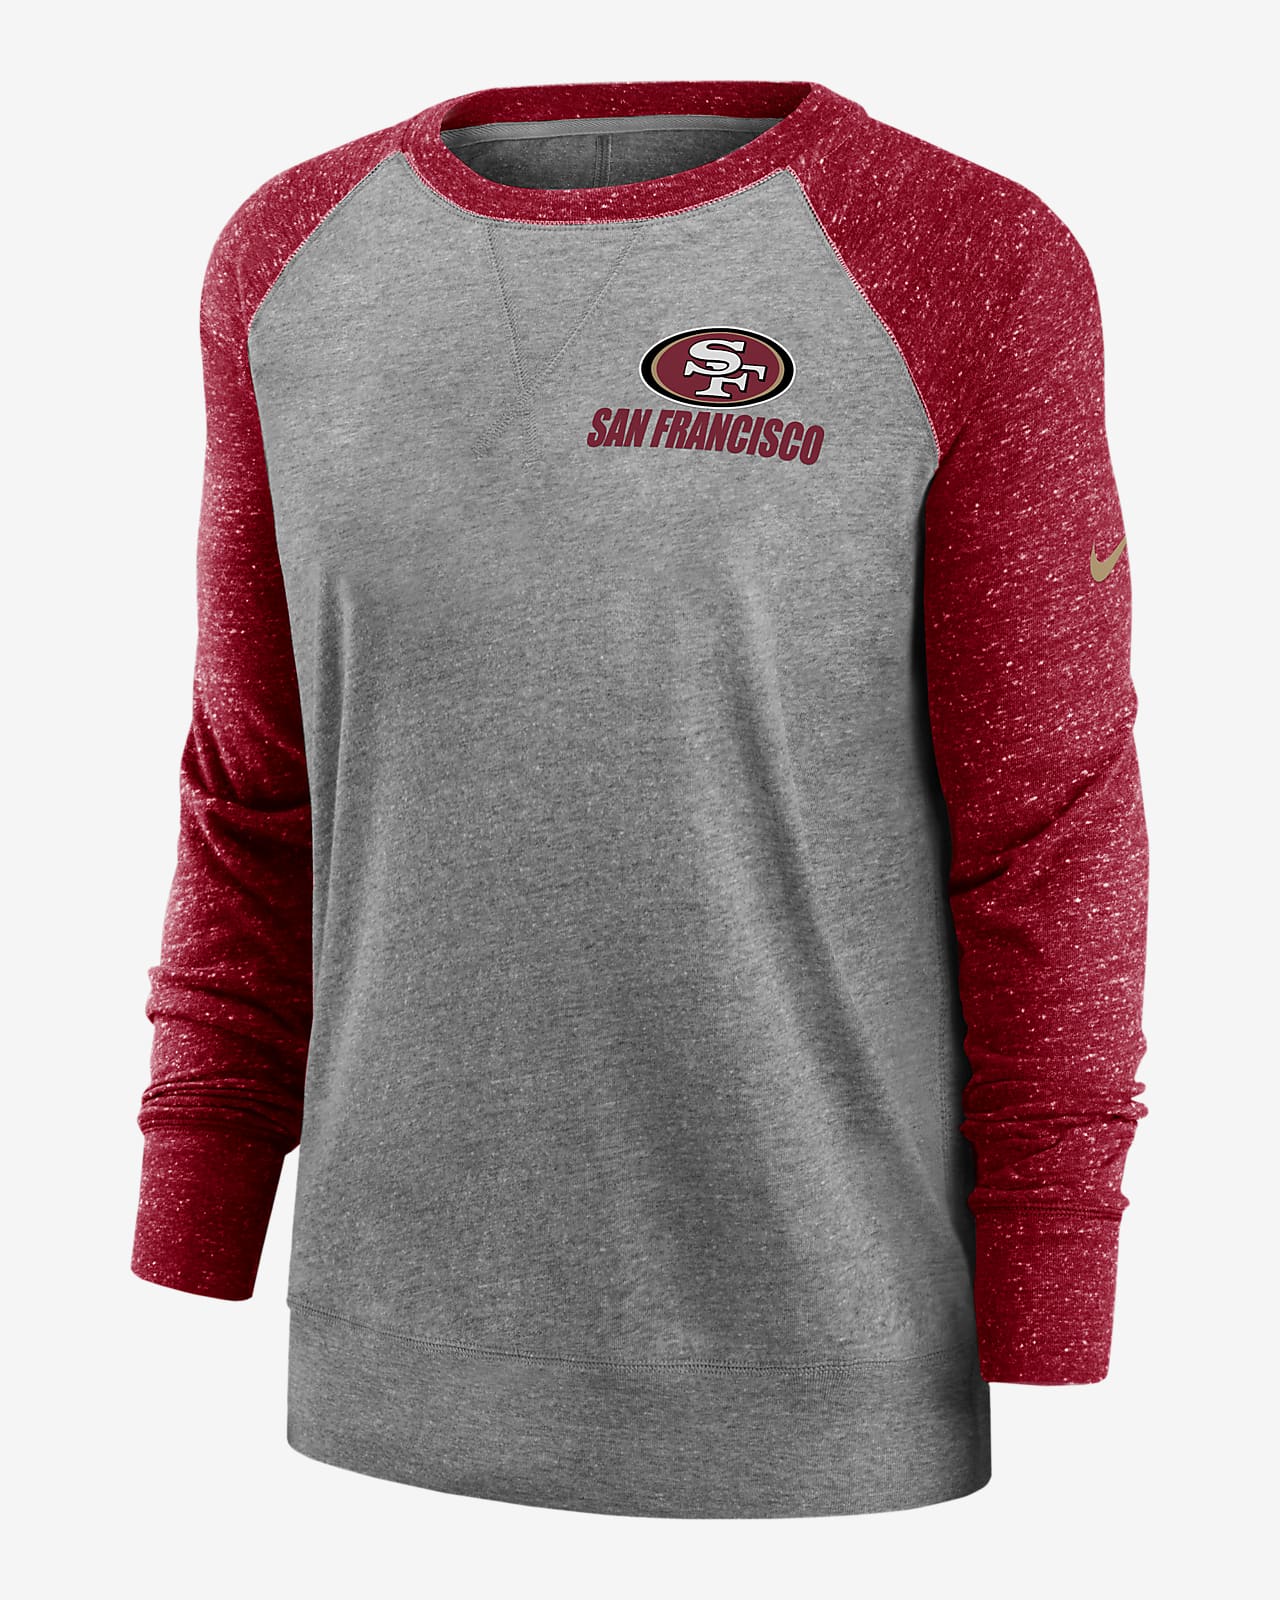 49ers womens shirts